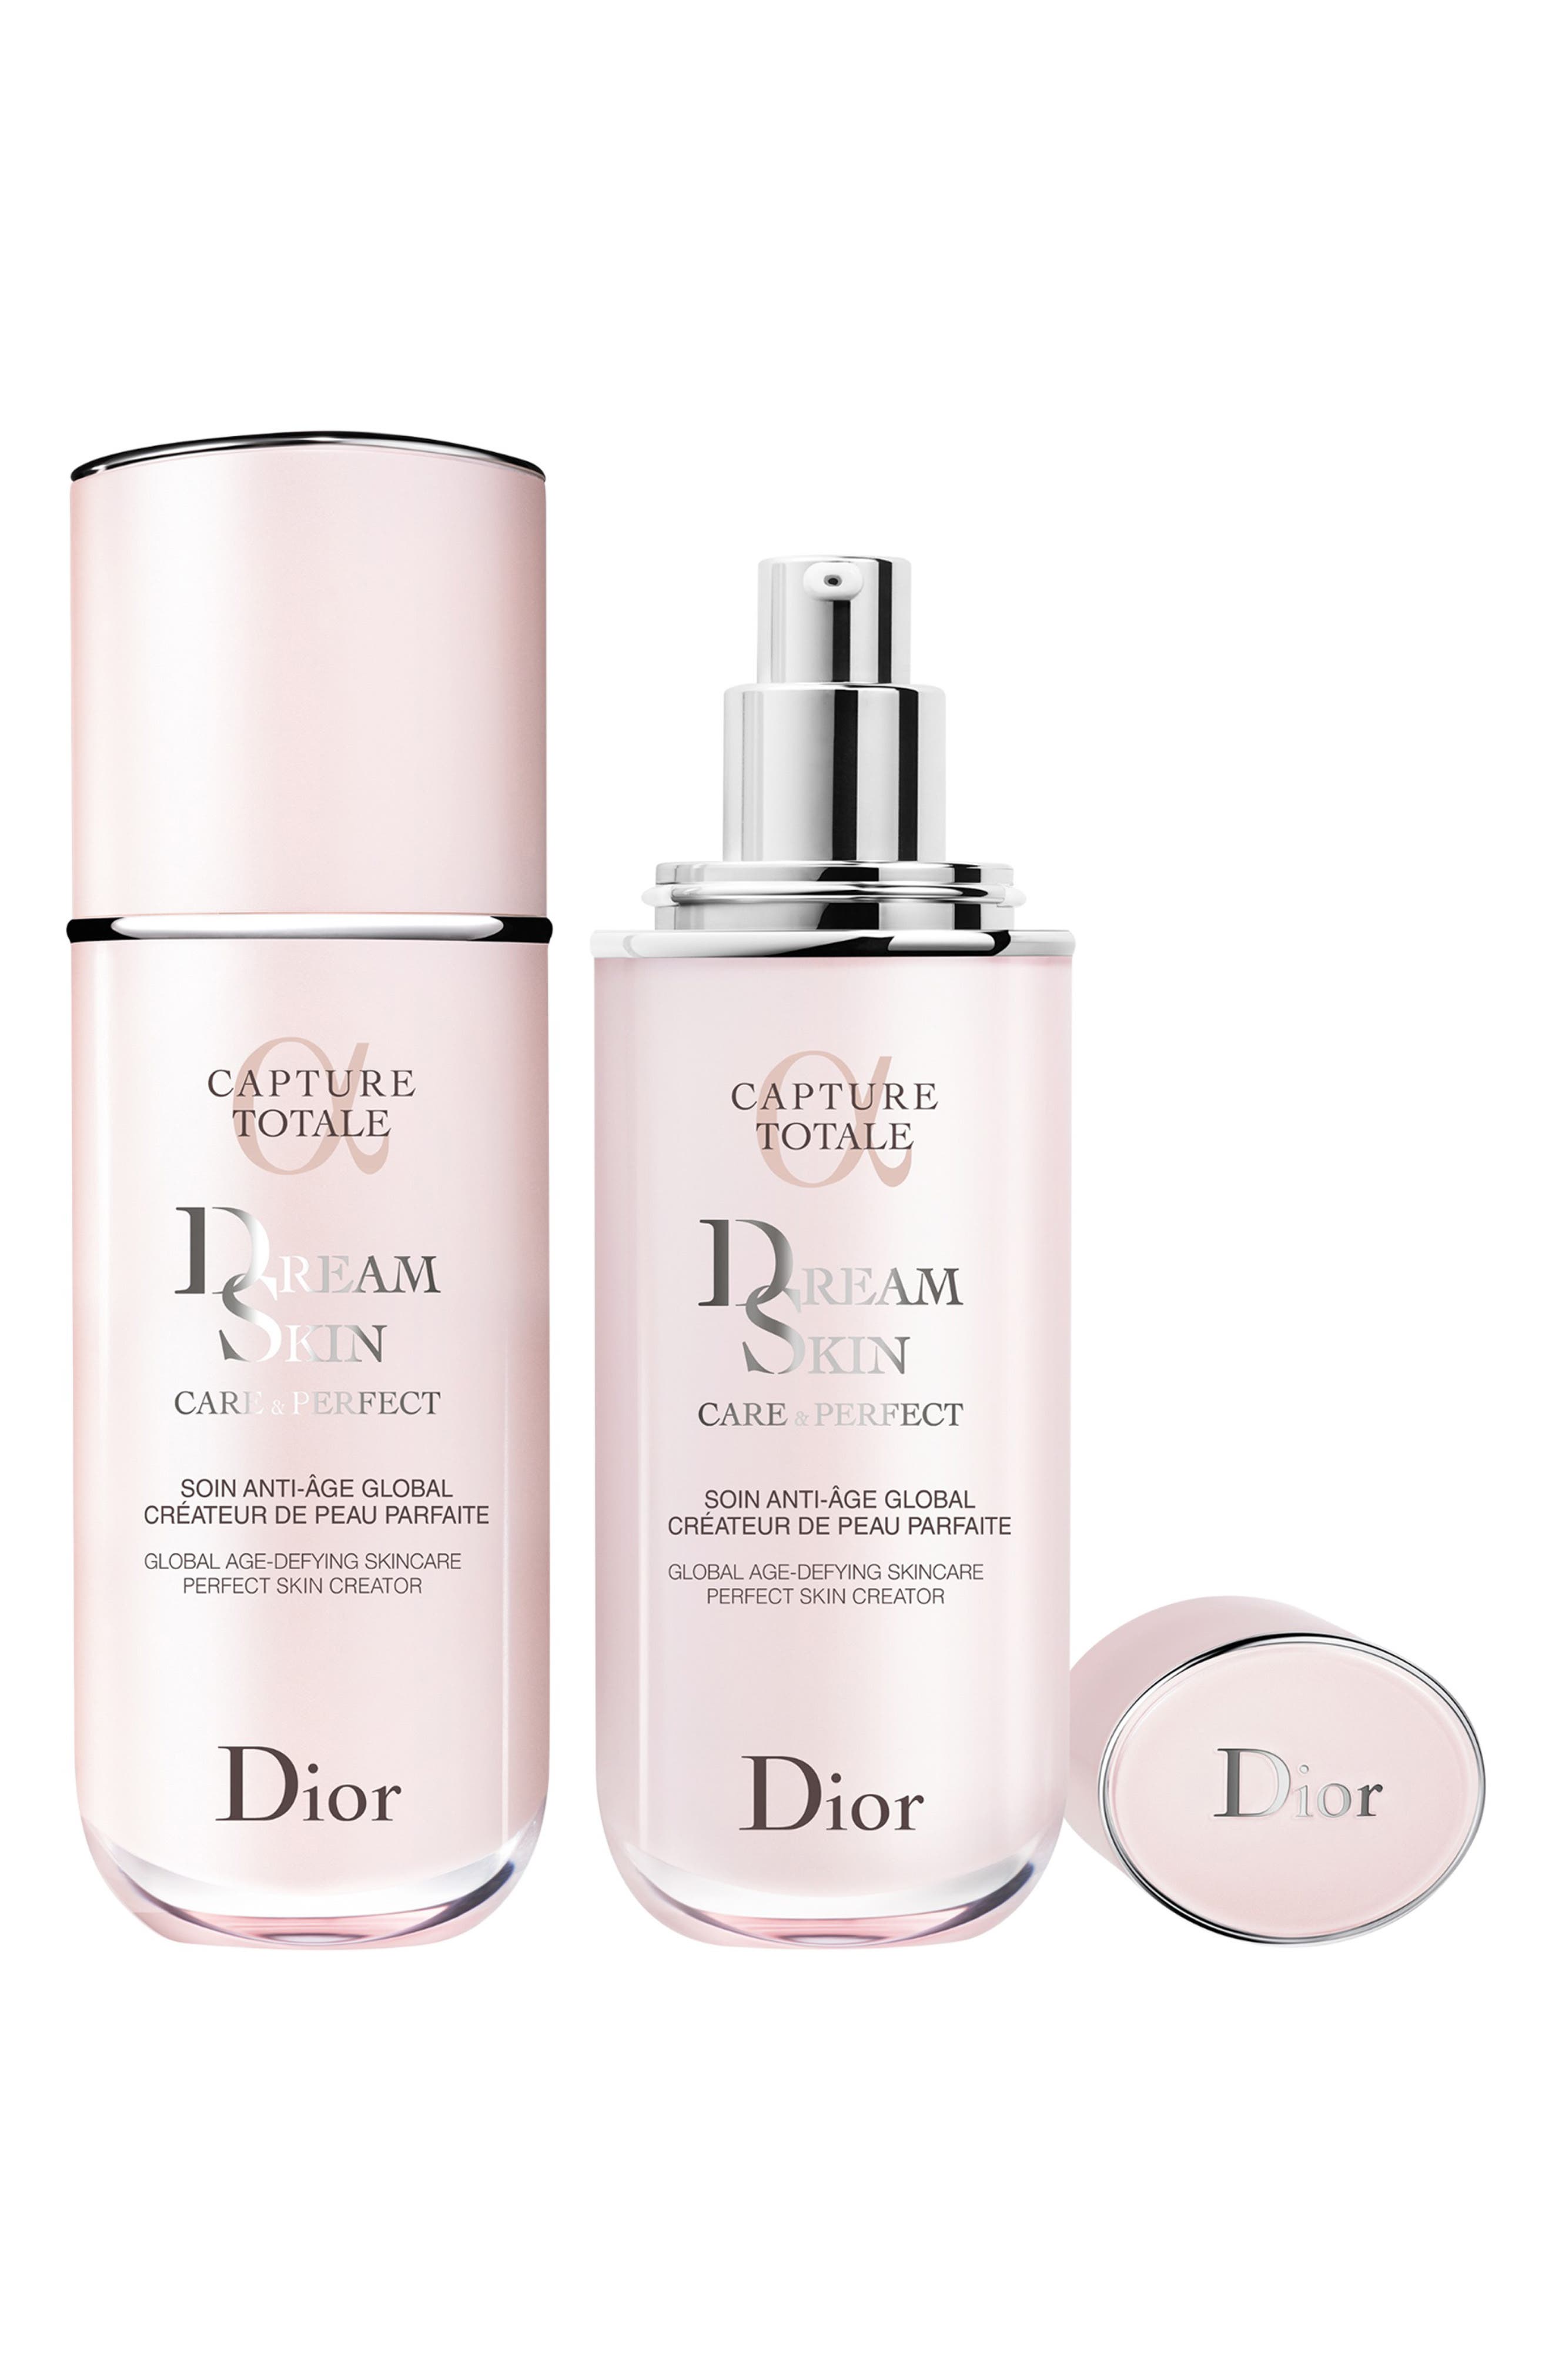 dior capture totale dream skin soin anti age global